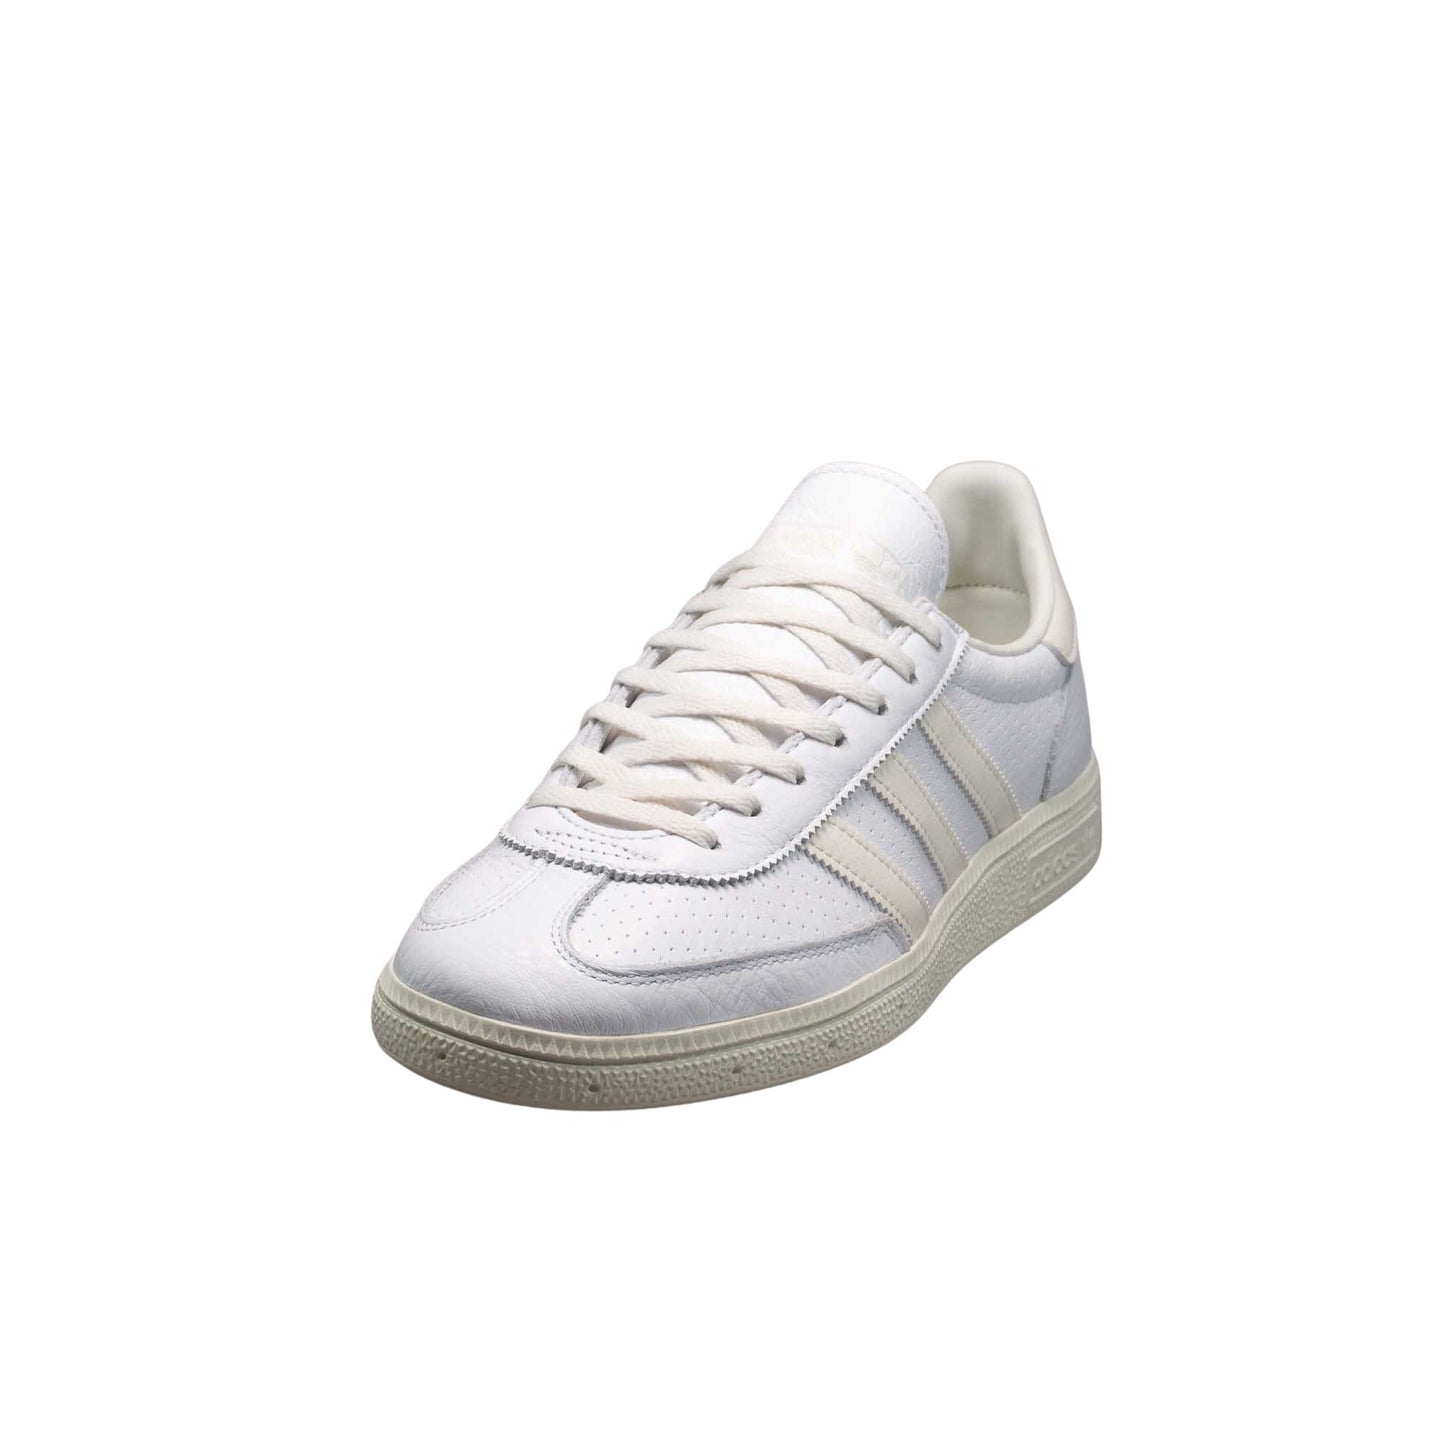 adidas-handball-spezial-footwear-white-off-white-ie9837